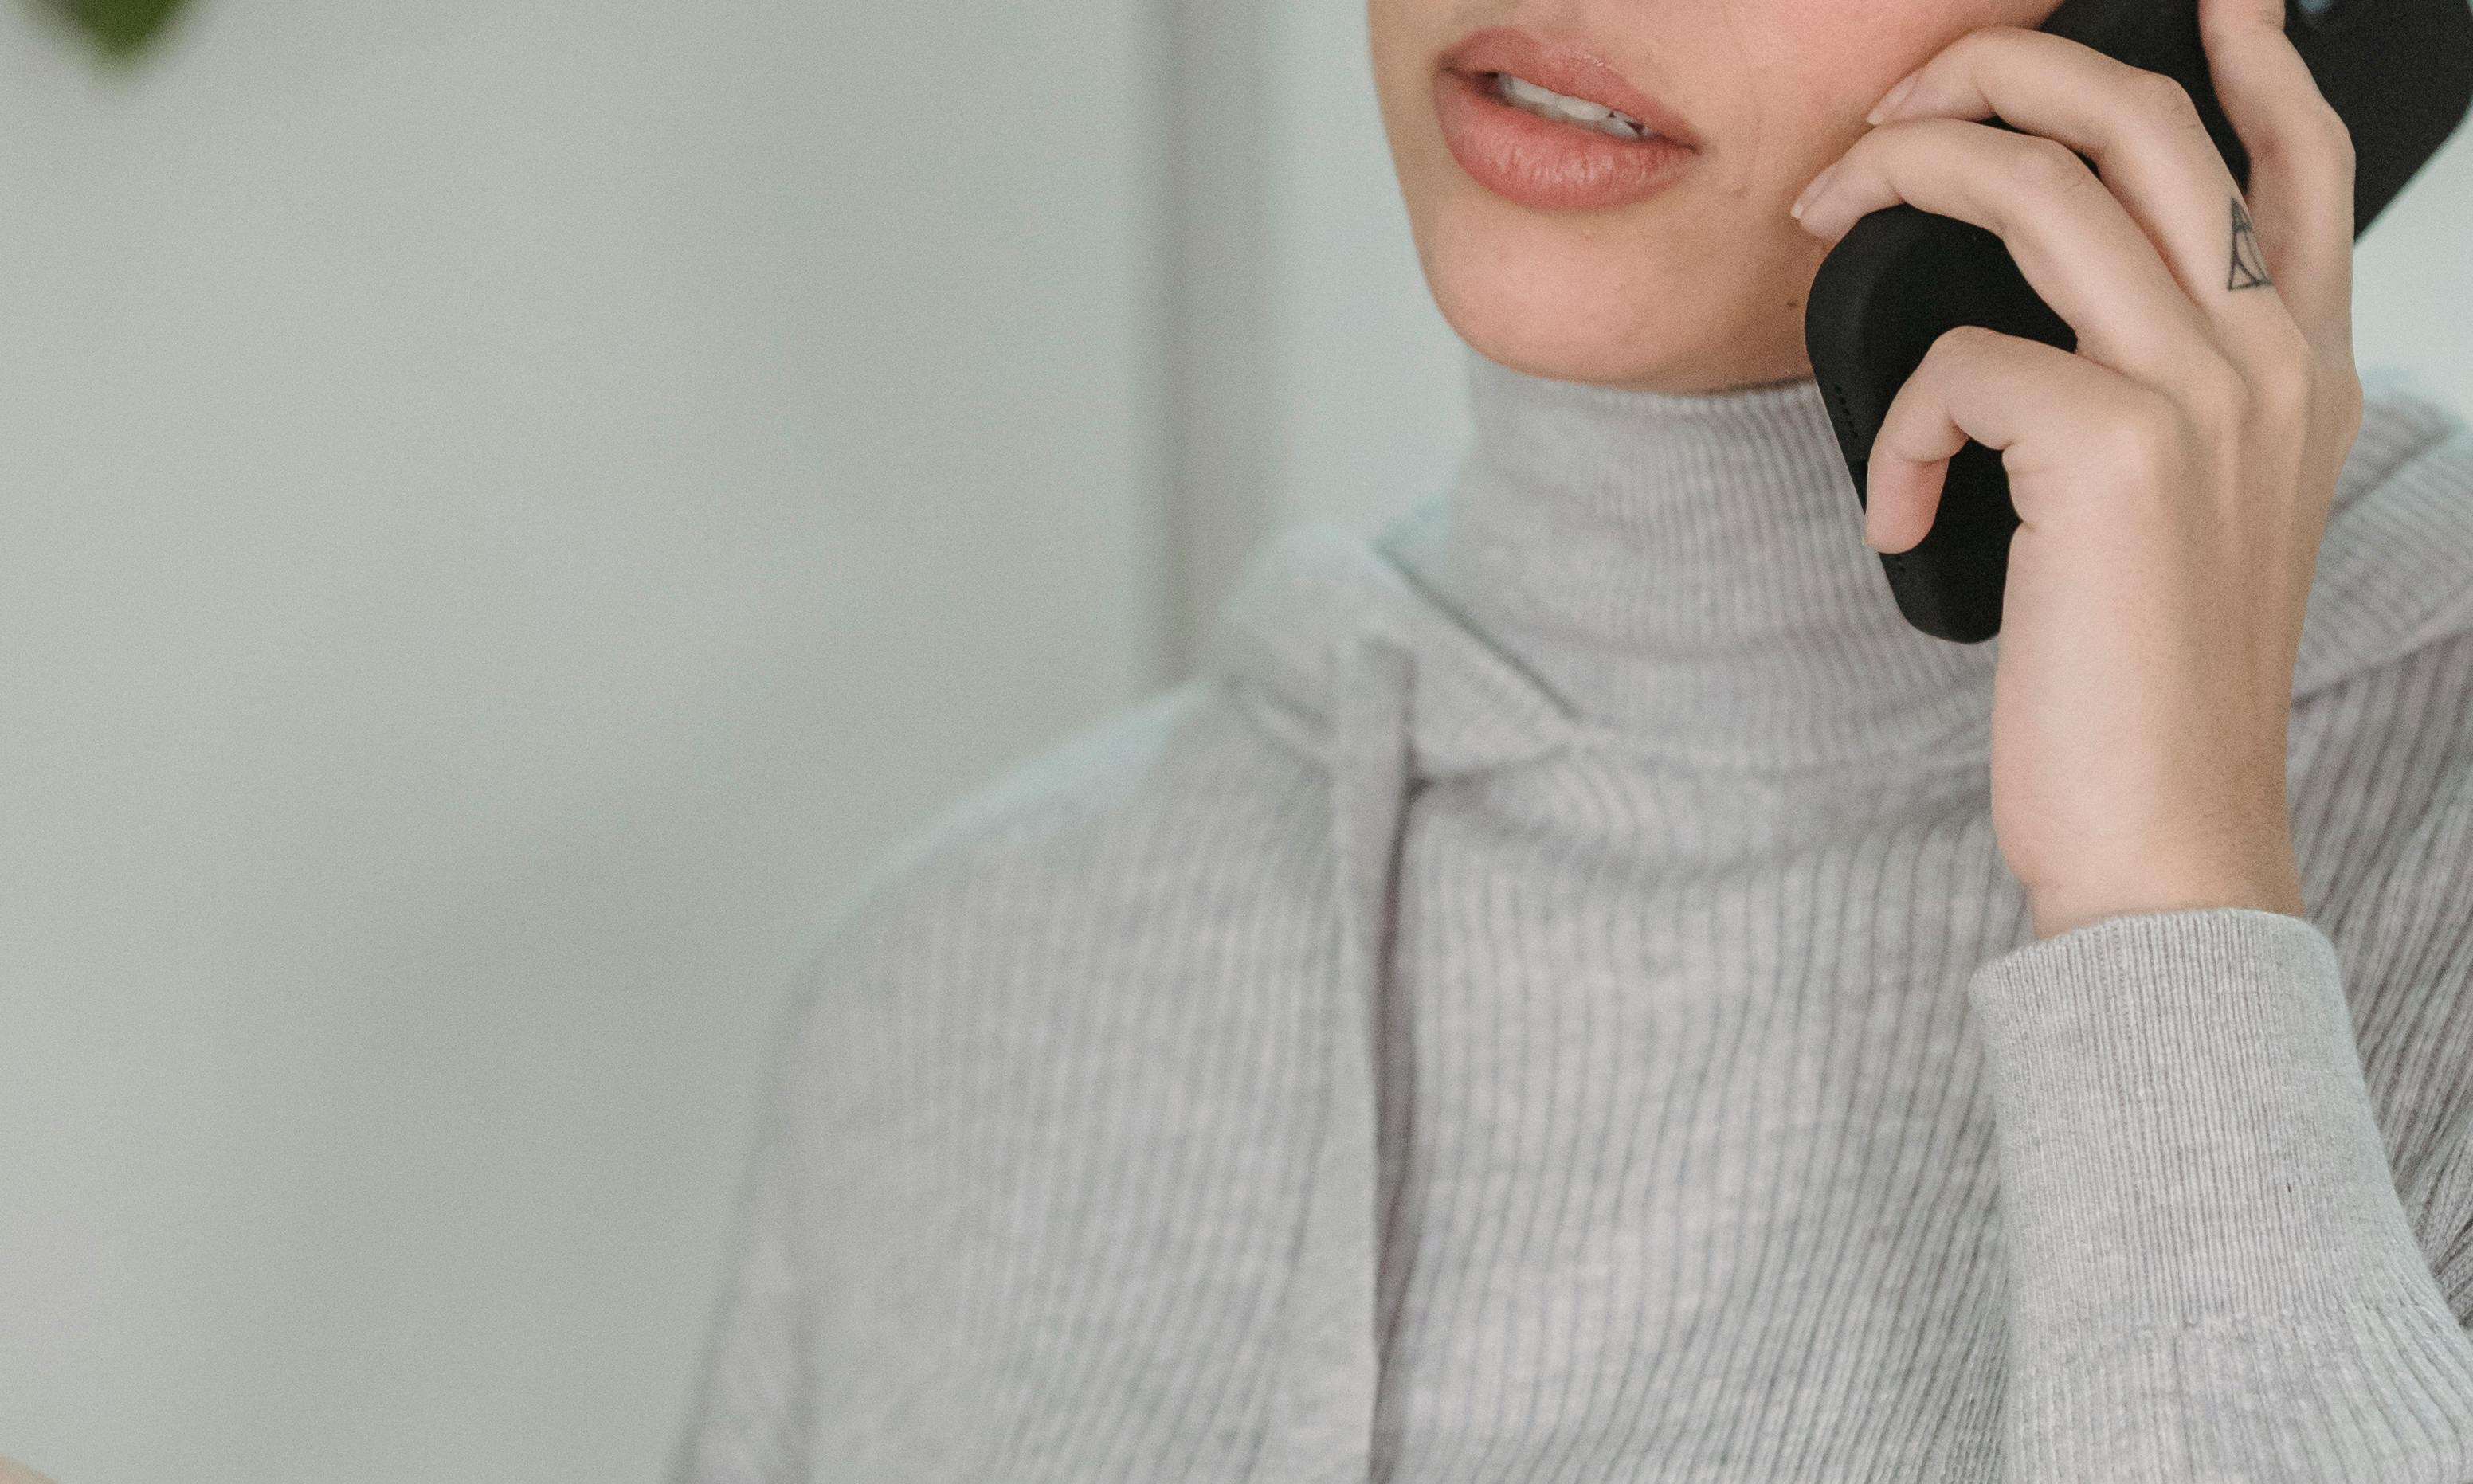 A woman making a phone call | Source: Pexels